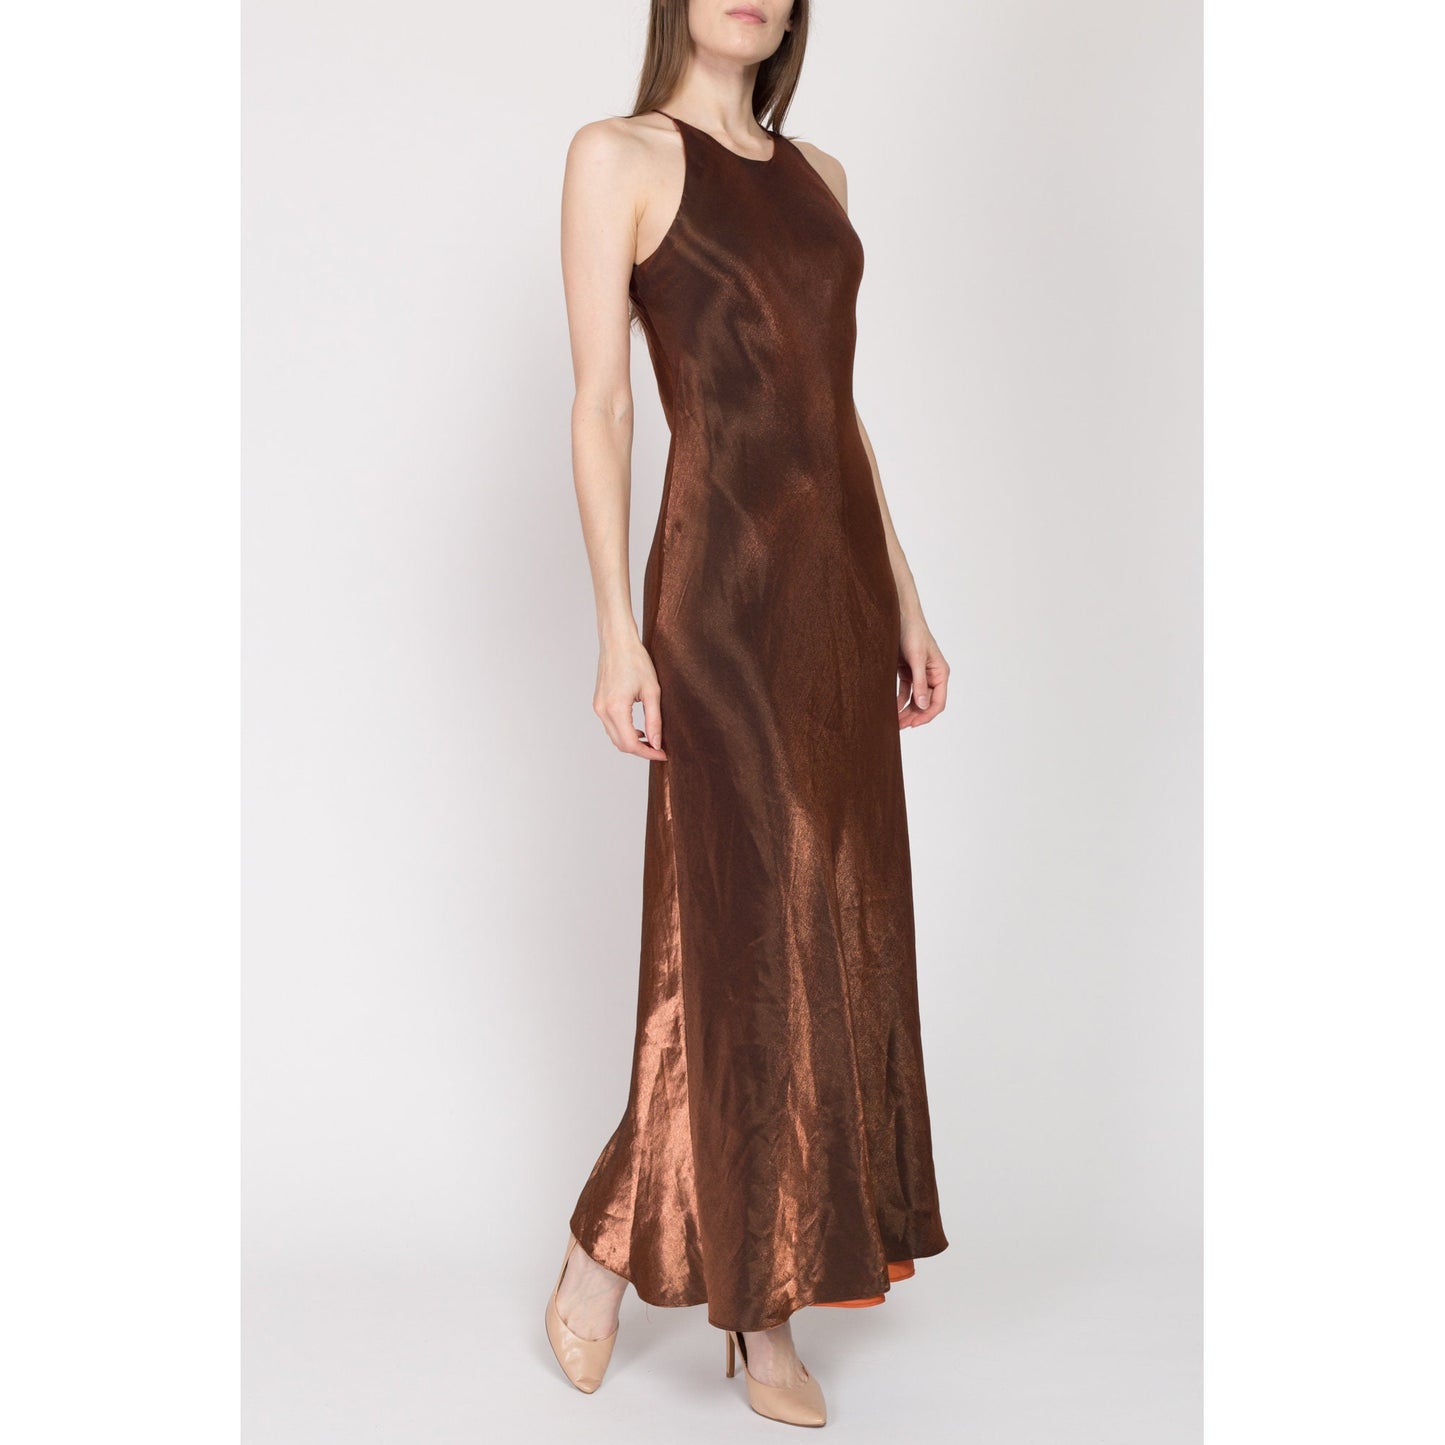 Small 90s Slinky Copper Satin Bias Cut Gown | Vintage Chelsea Nites Sleeveless Halter Racerback Formal Maxi Dress